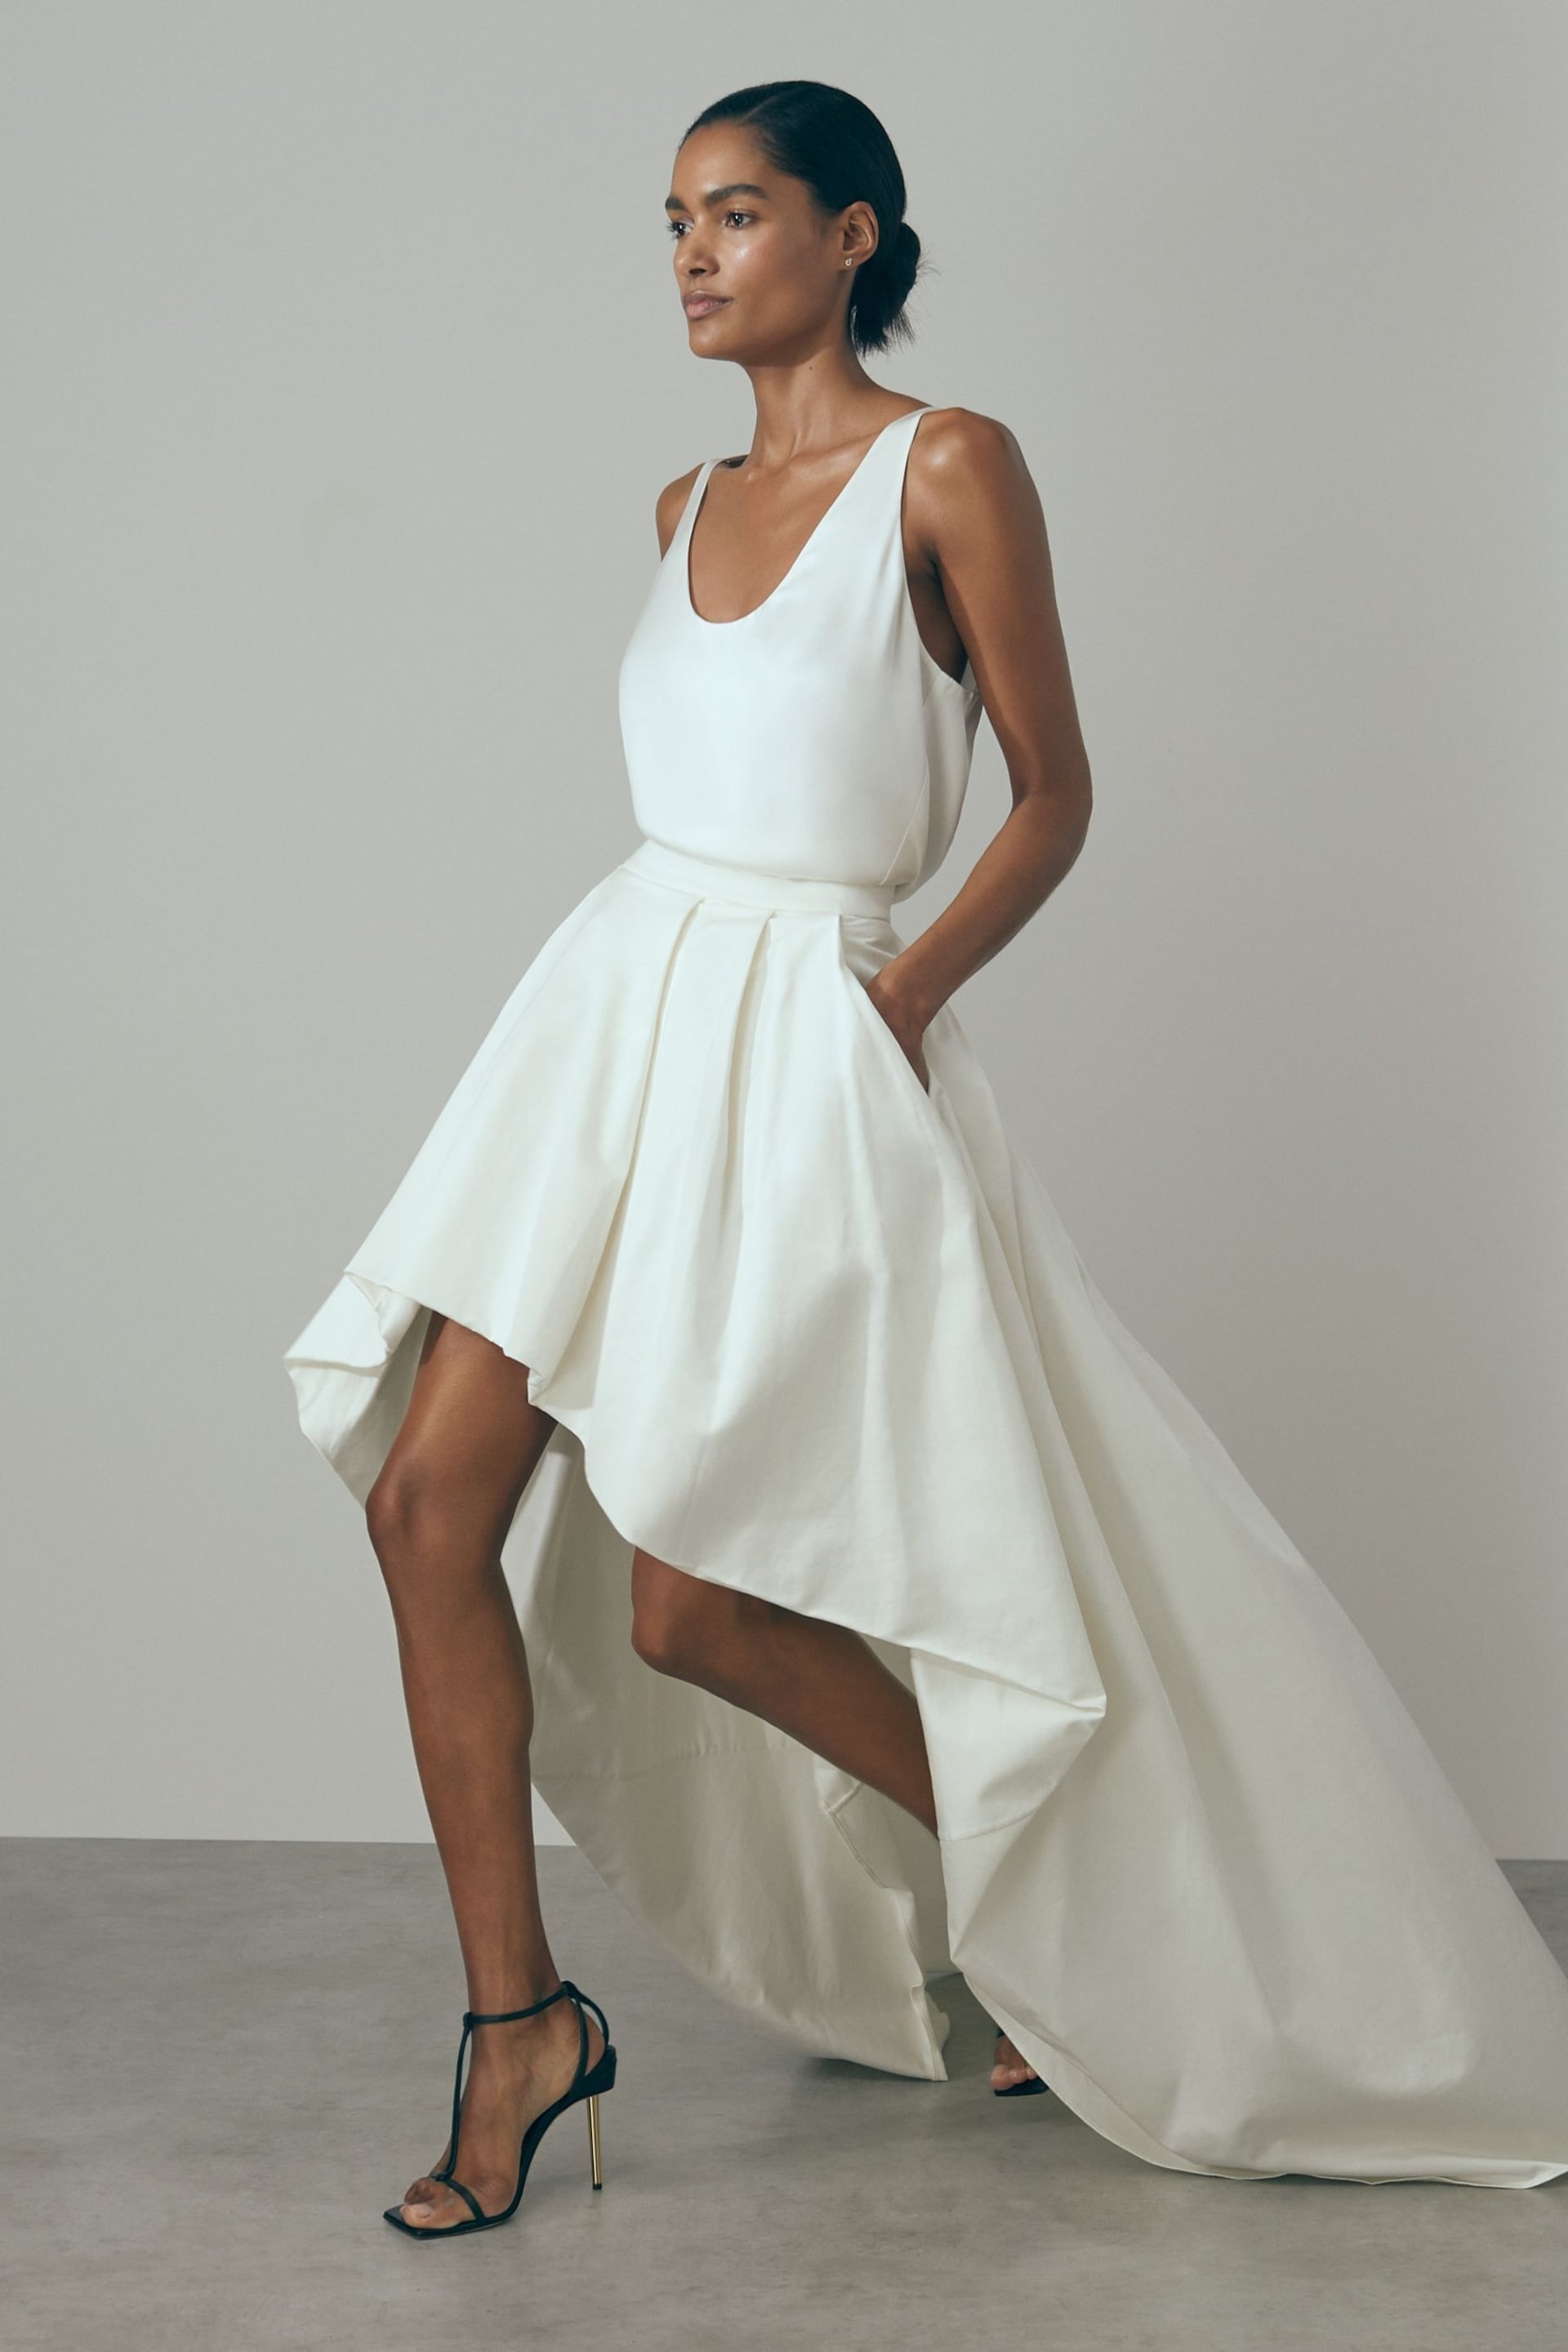 Reiss Ivory Eden High-Low Bridal Skirt - Image 1 of 6